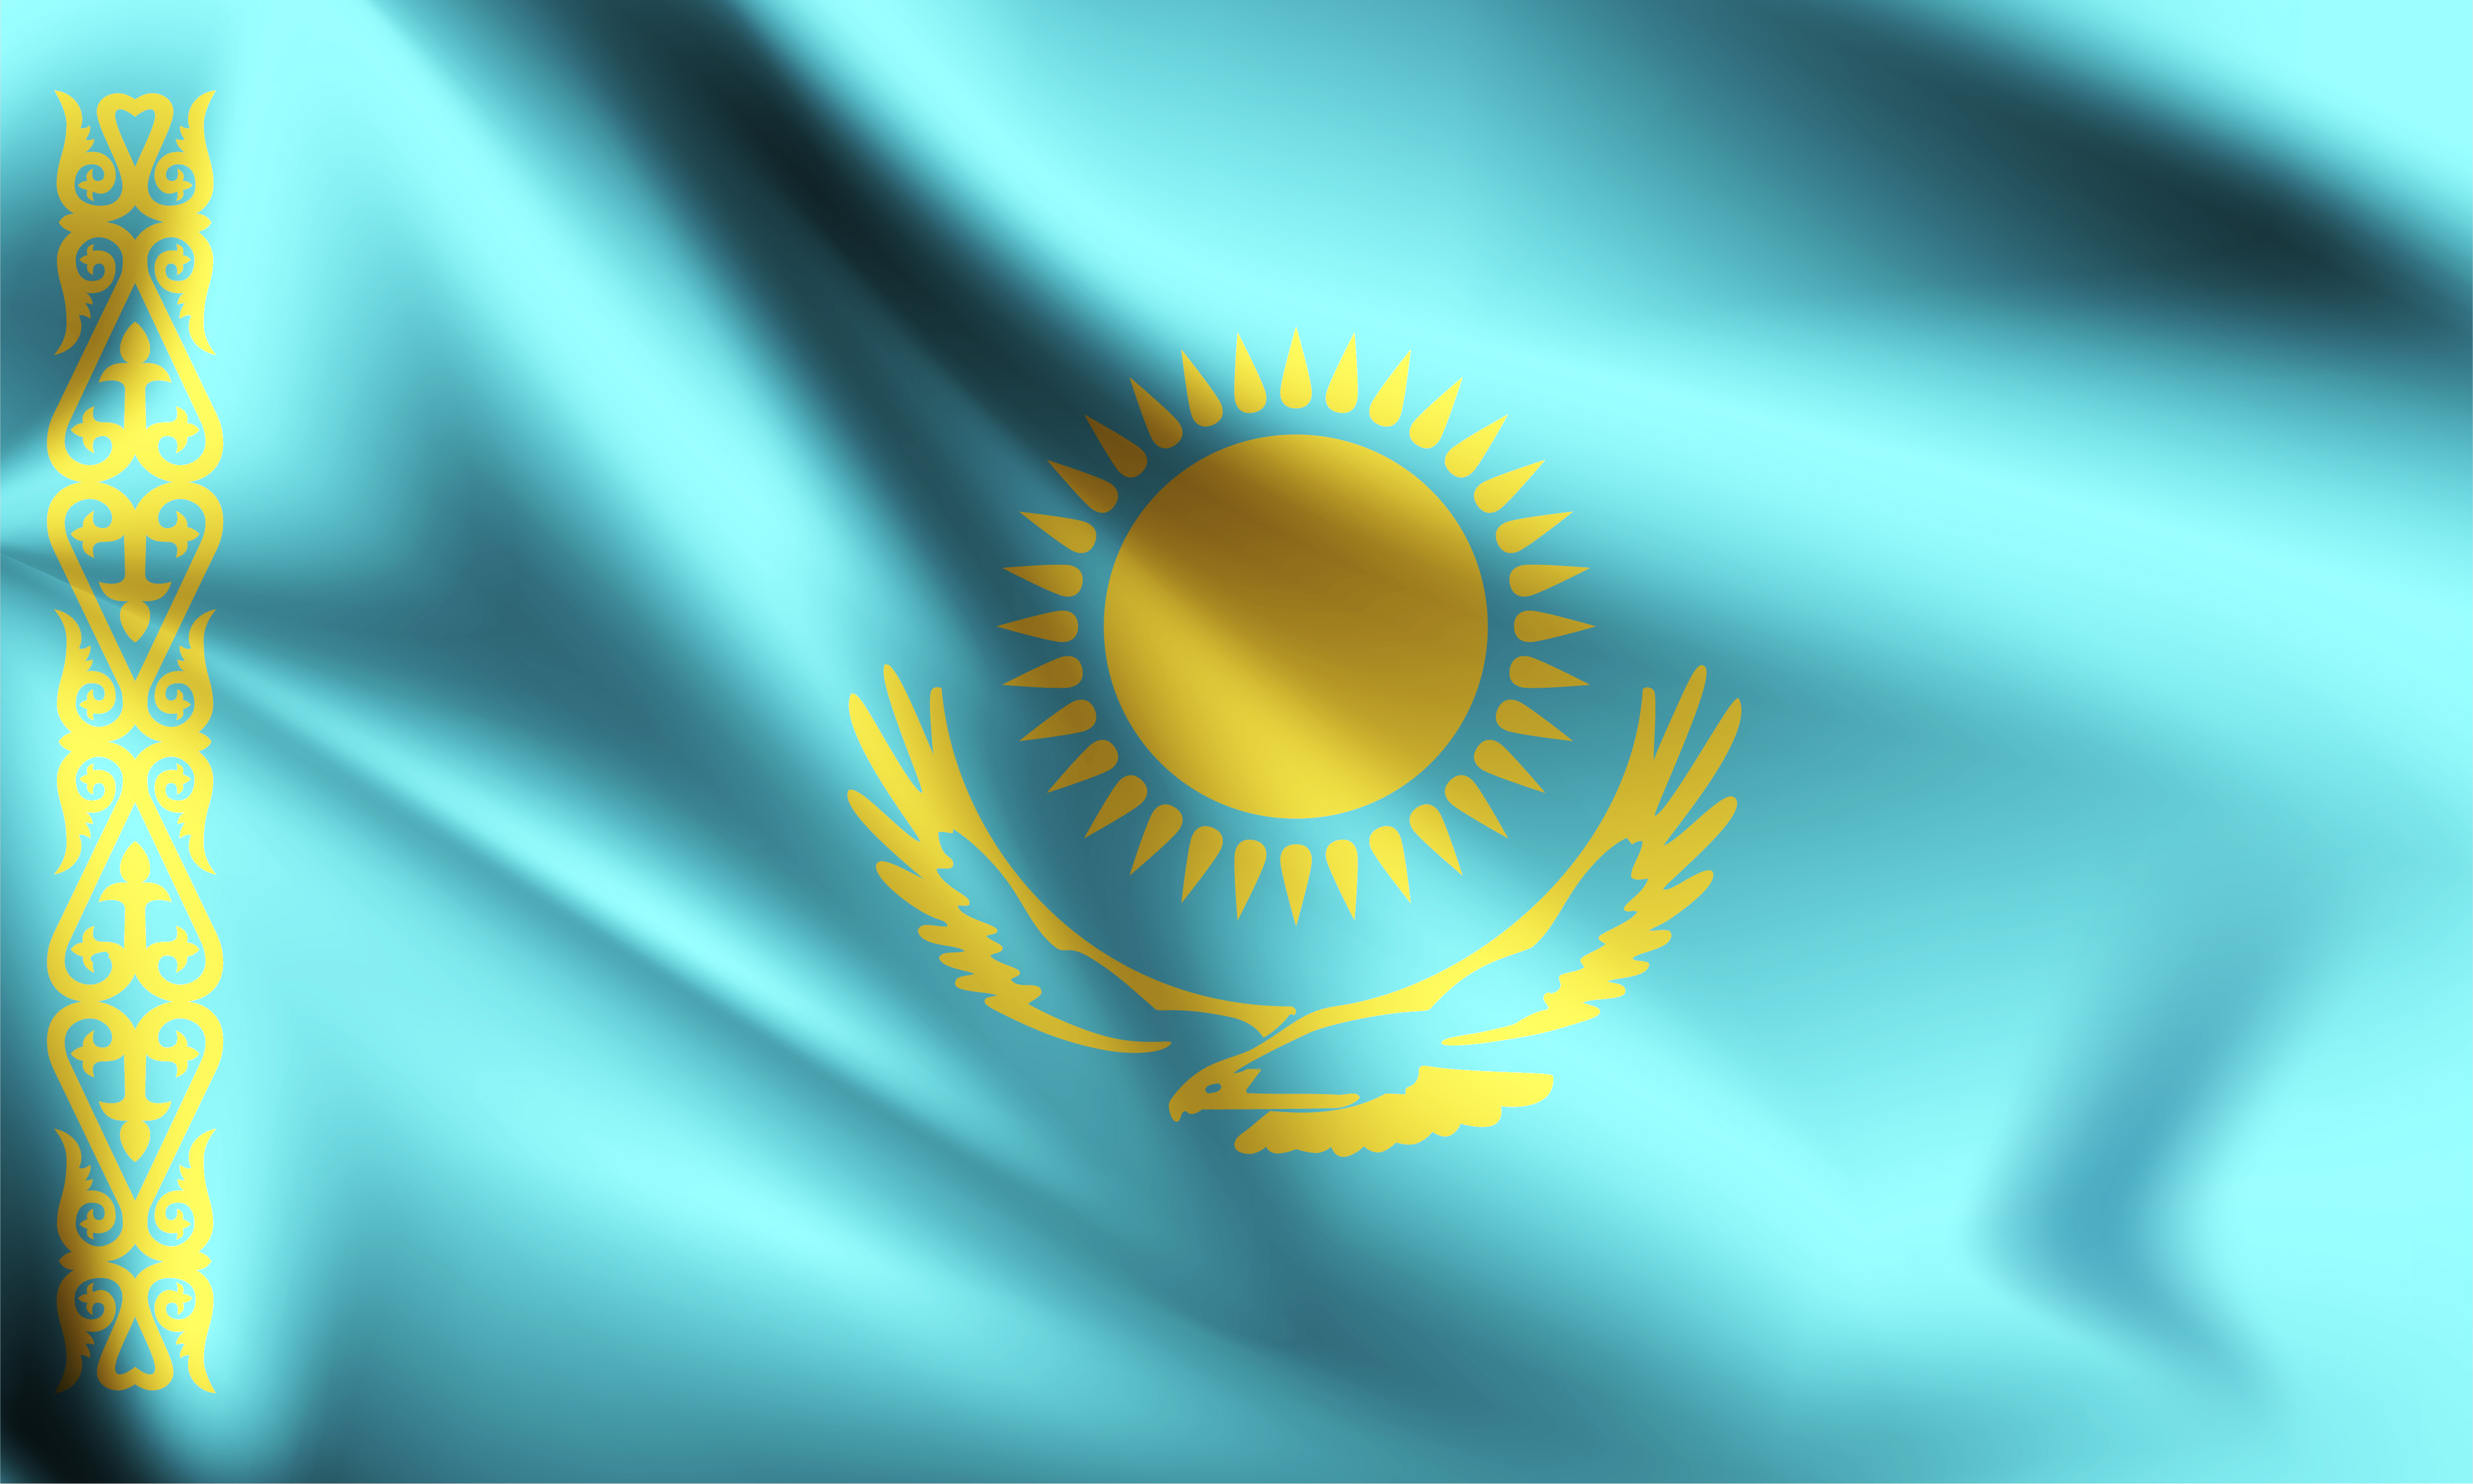 Download Kazakhstan 3d flag - Download Free Vectors, Clipart ...